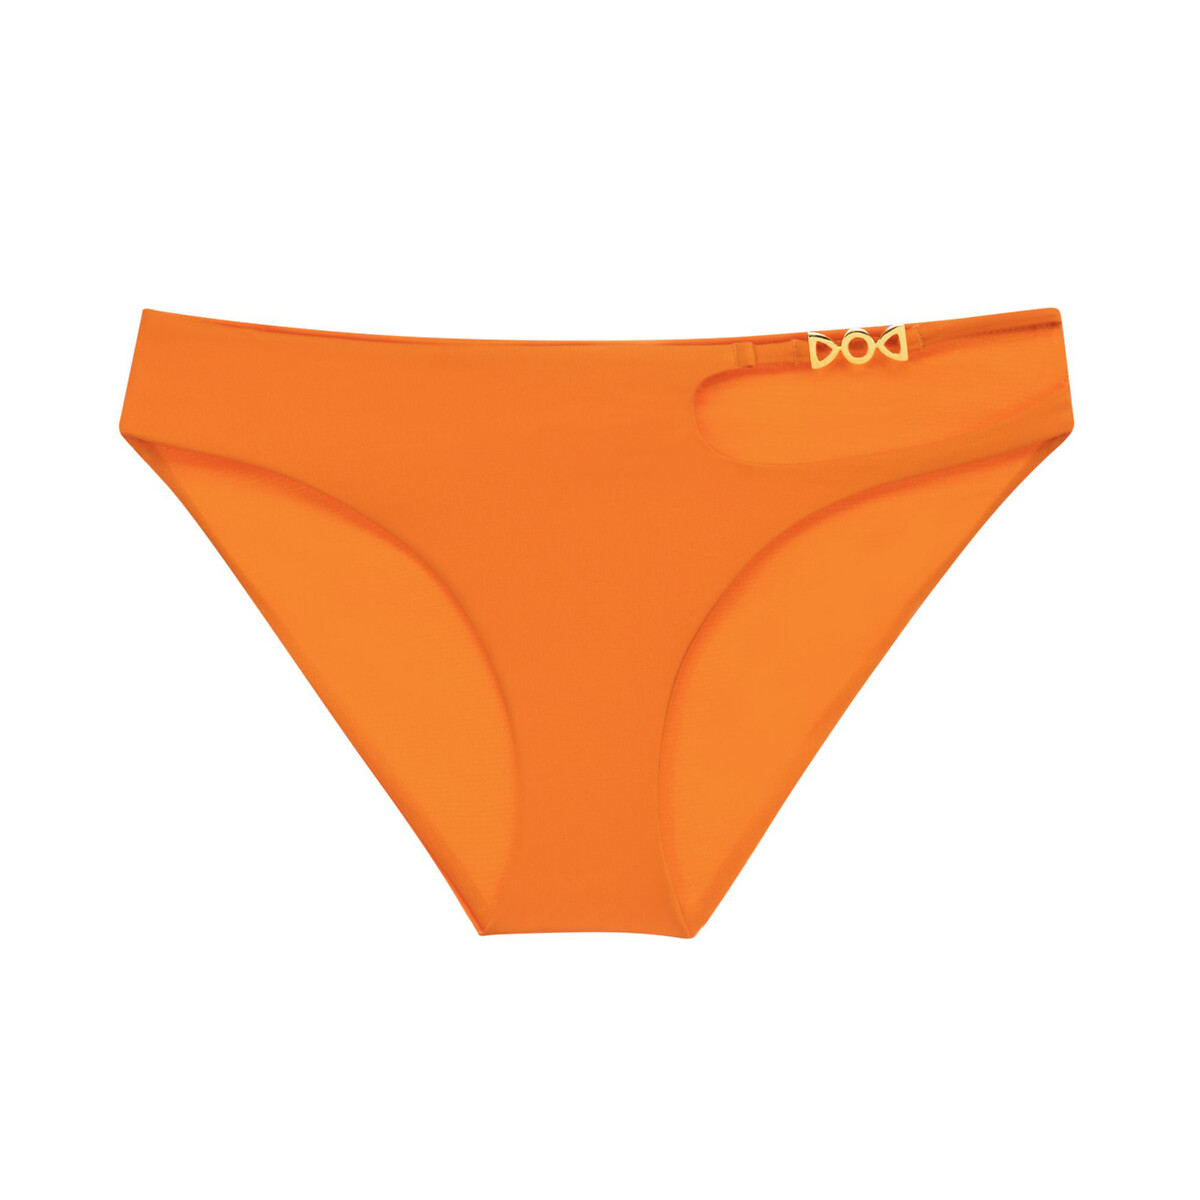 Низ от купальника Astarita XS оранжевый низ от купальника tahiti xl оранжевый